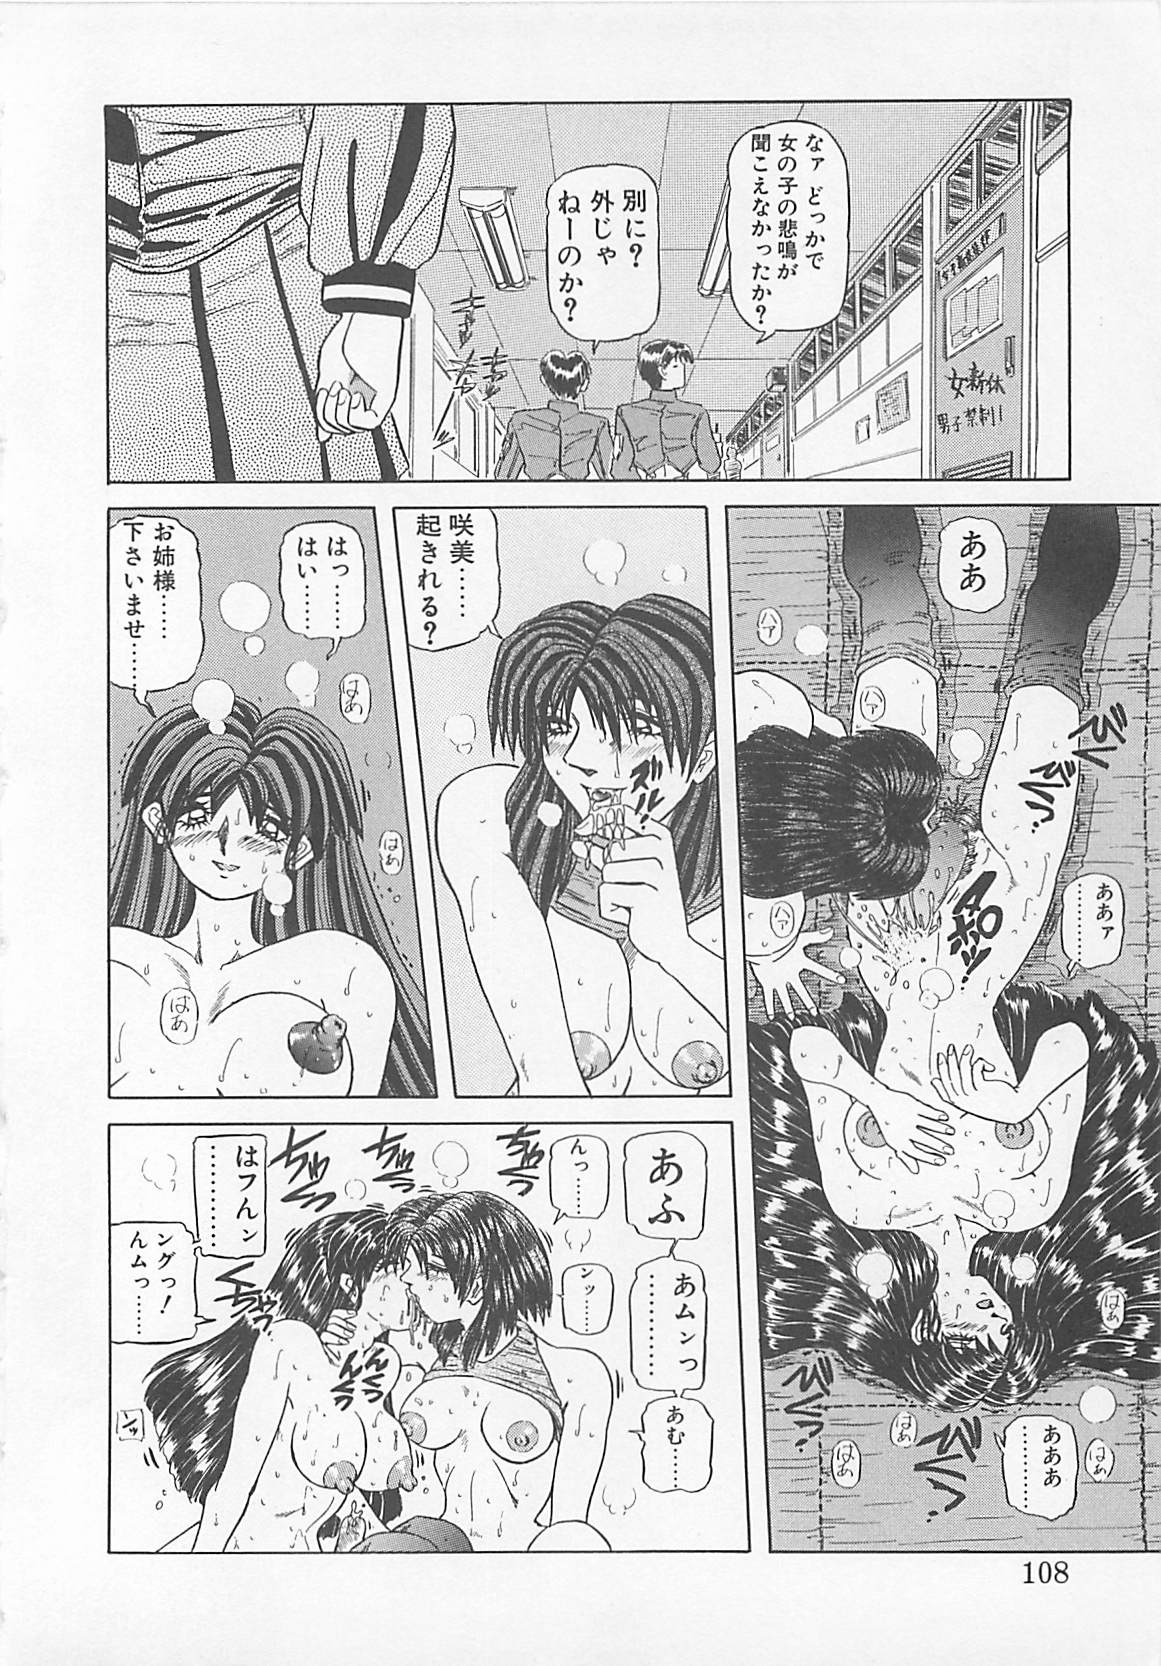 [Anthology] COMIC B-Tarou 5 (成年コミック) [アンソロジー] コミック ビー太郎 5